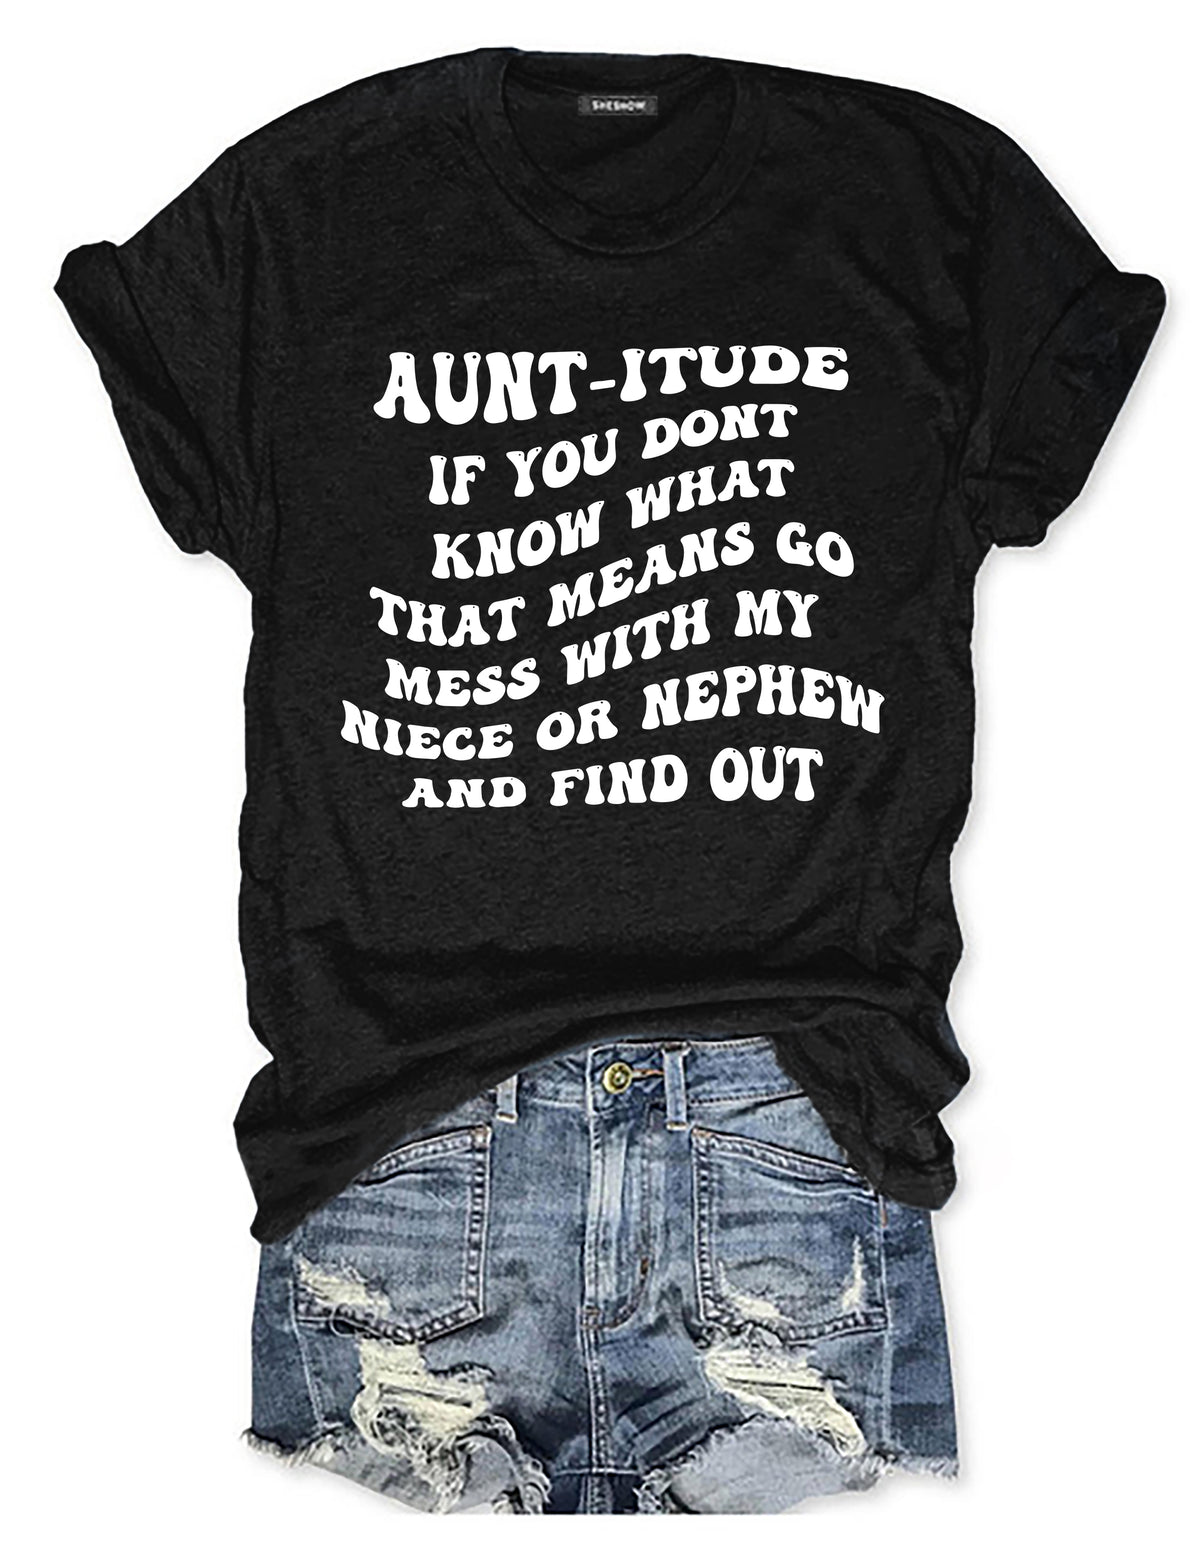 T-shirt tante-itude